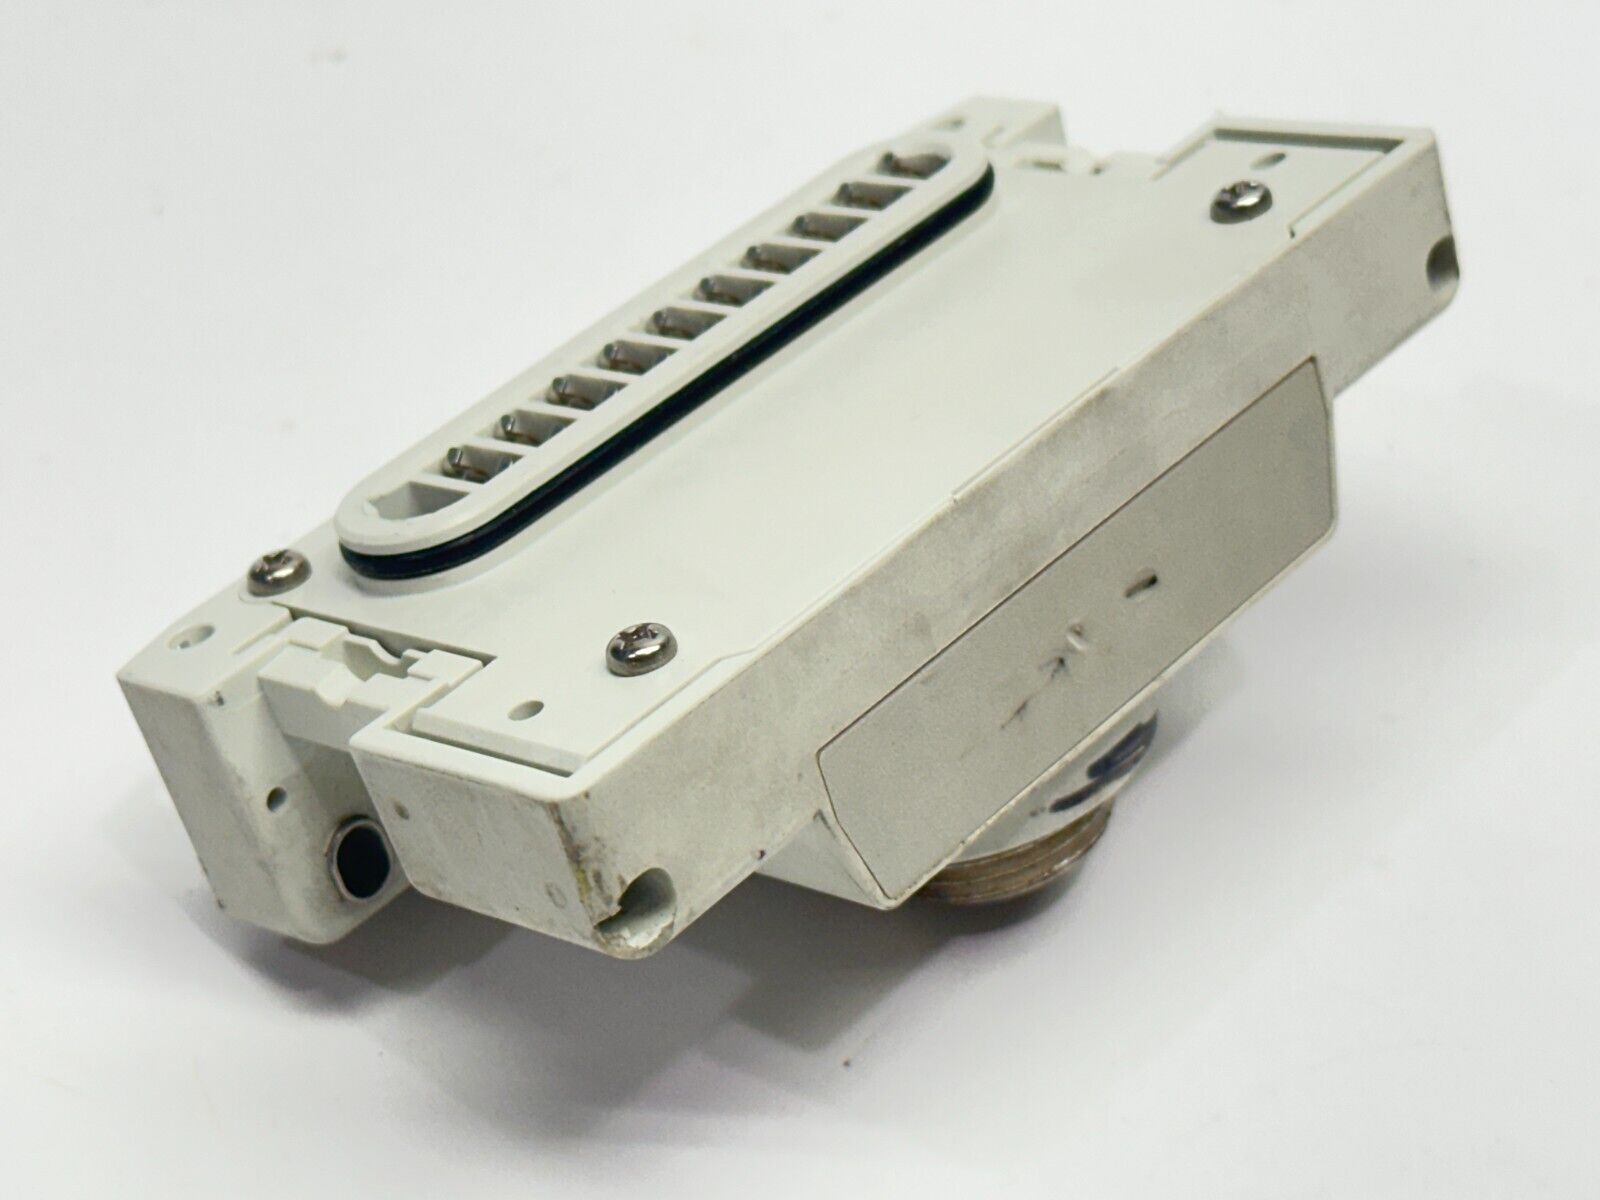 SMC EX600-ED3 Pneumatic Serial Interface Unit End Plate 7/8